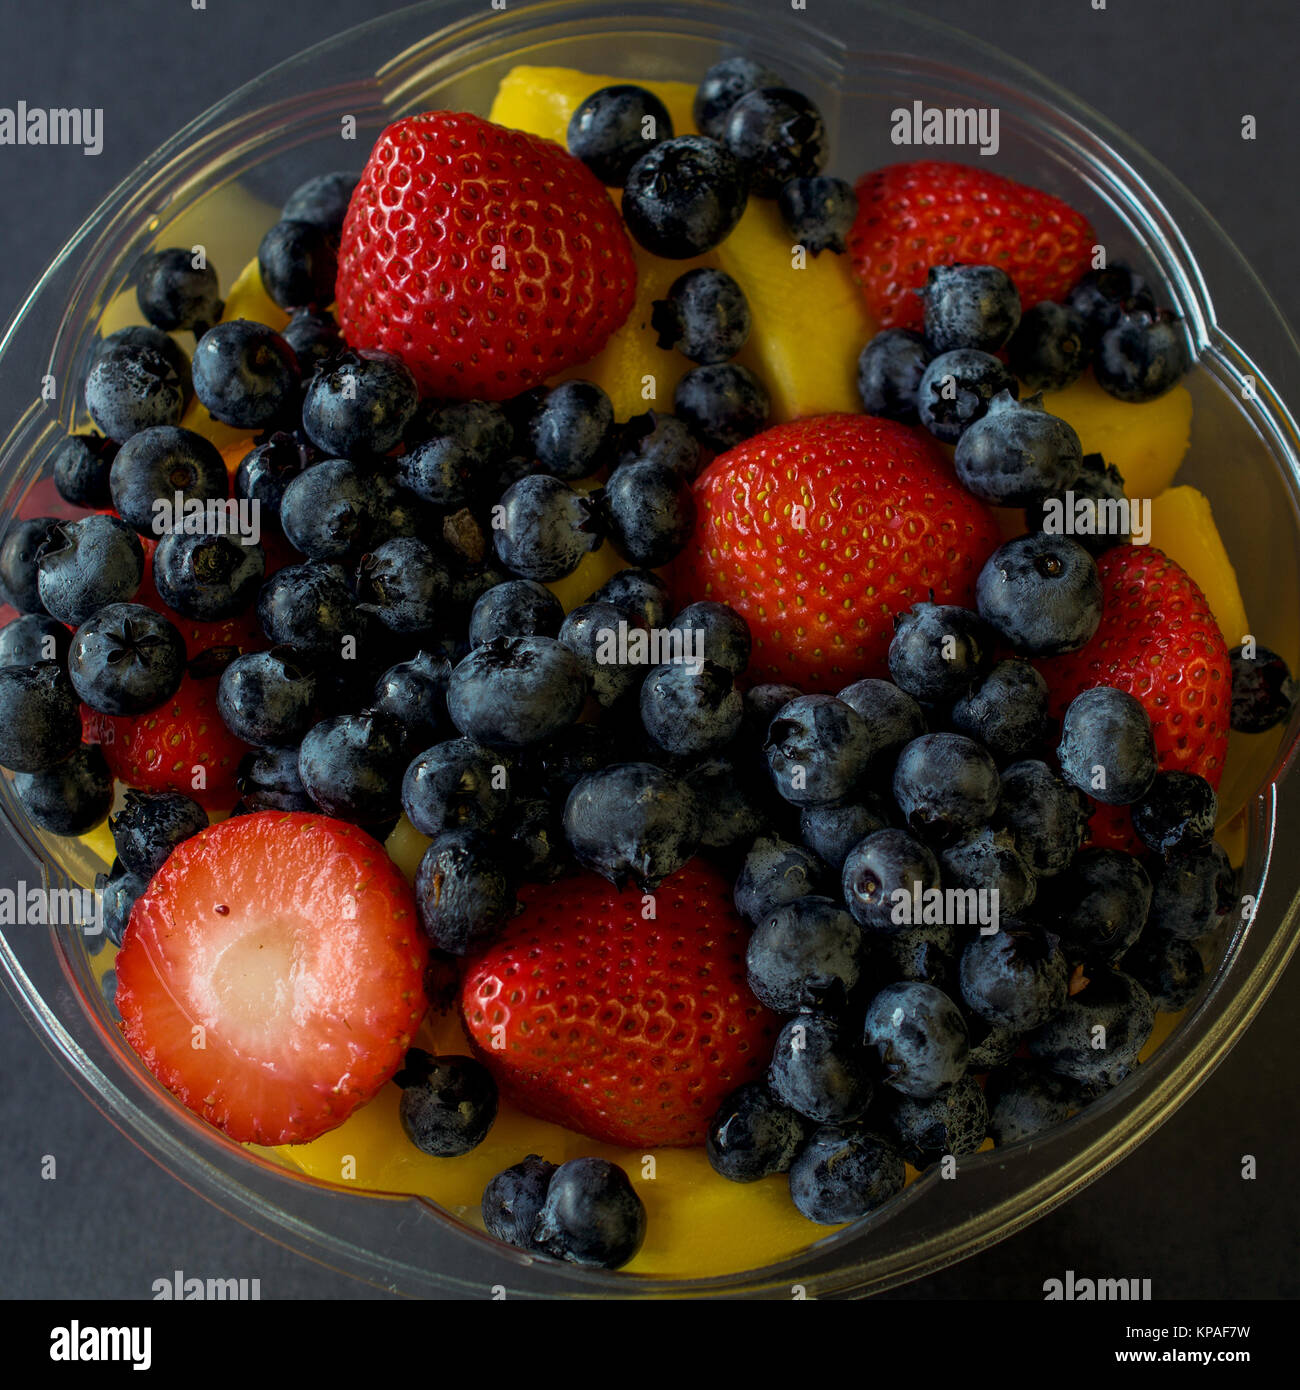 https://c8.alamy.com/comp/KPAF7W/closeup-on-mango-strawberries-and-blueberry-fruit-salad-in-plastic-KPAF7W.jpg